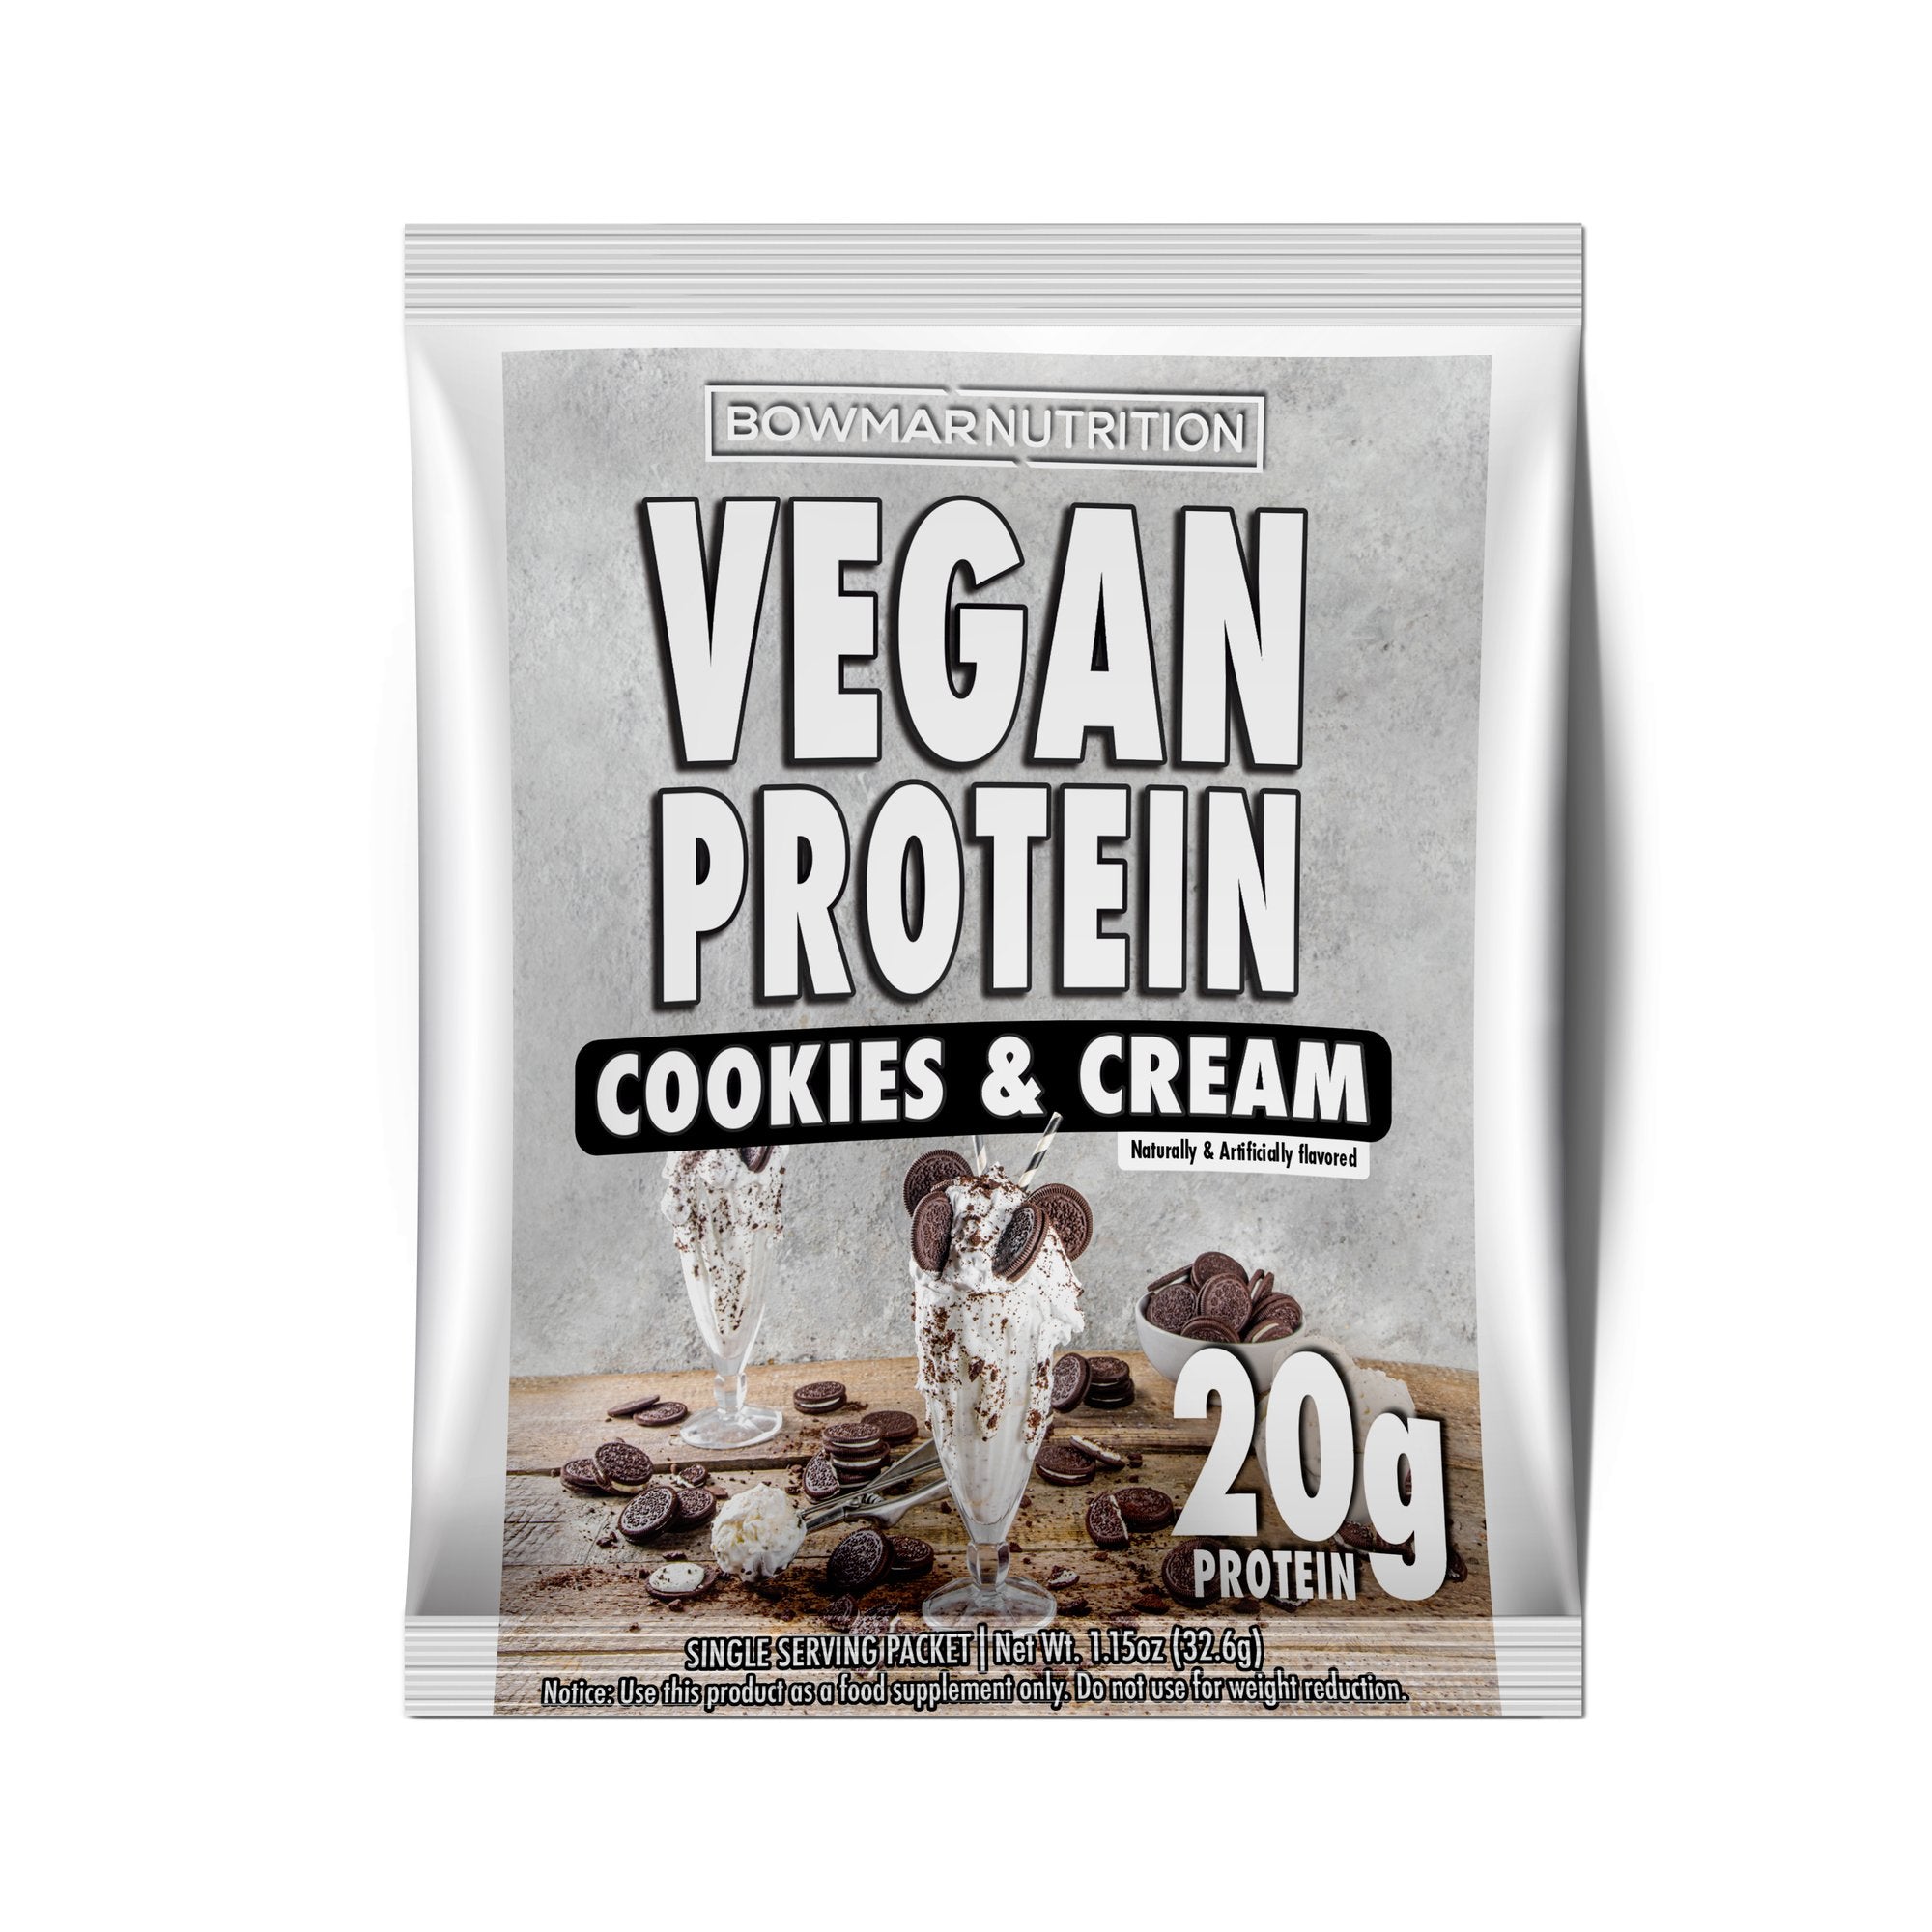 Bowmar VEGAN Protein Powder Sample (1 serving) bowmar-vegan-protein-single-serving Protein Snacks Cookies And Cream bowmar